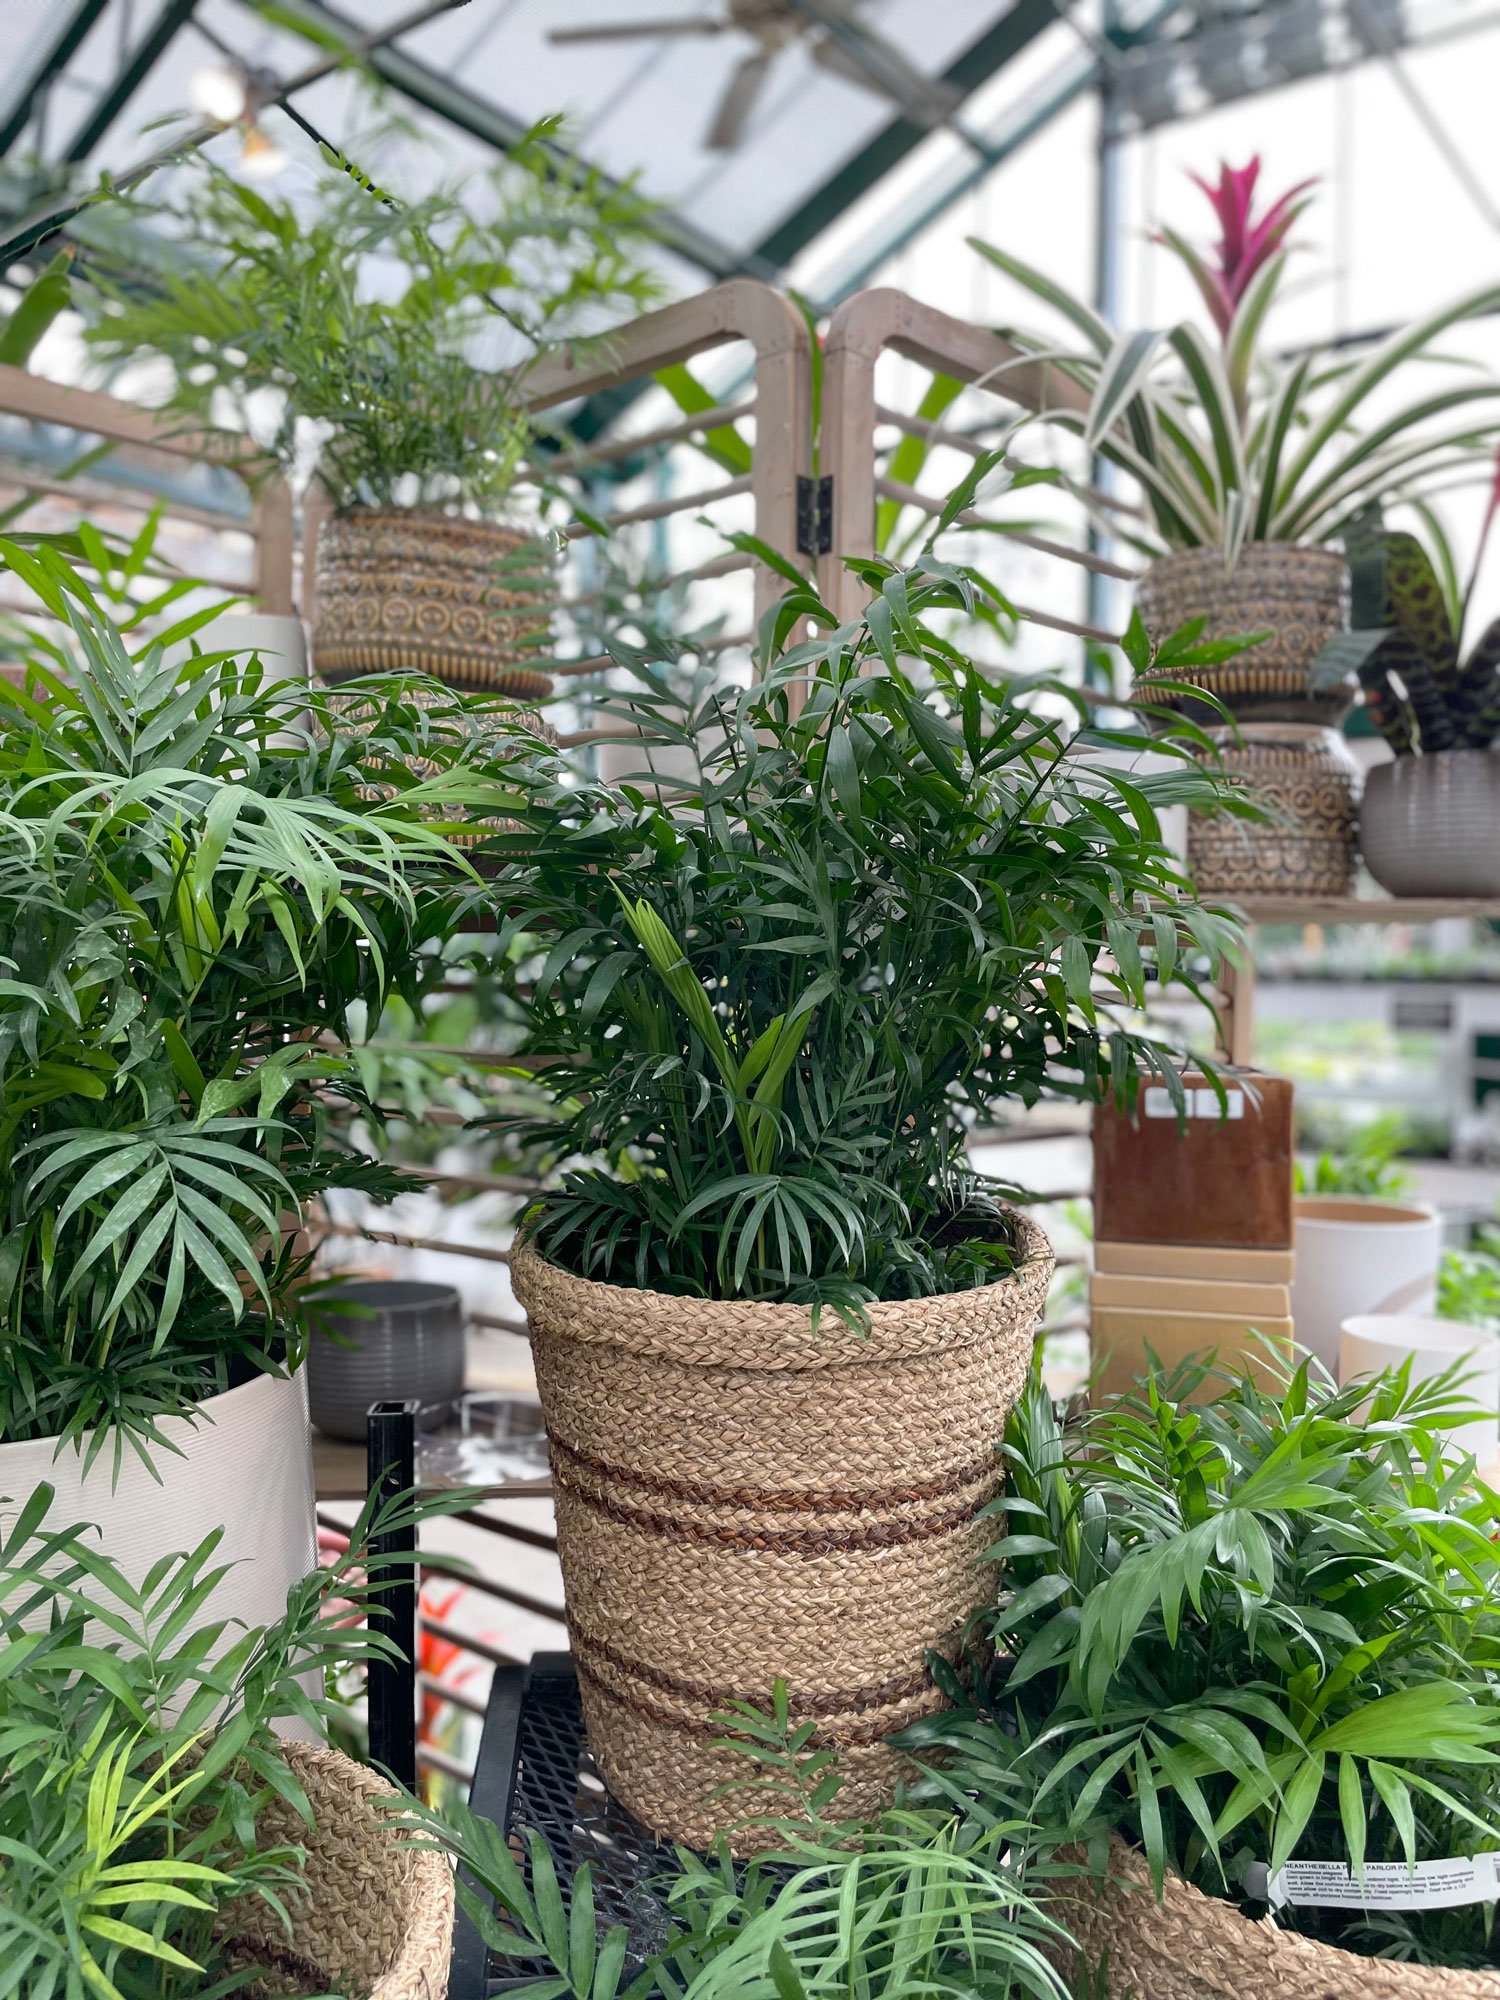 indoor-plants-and-baskets-in-pavilion.jpg